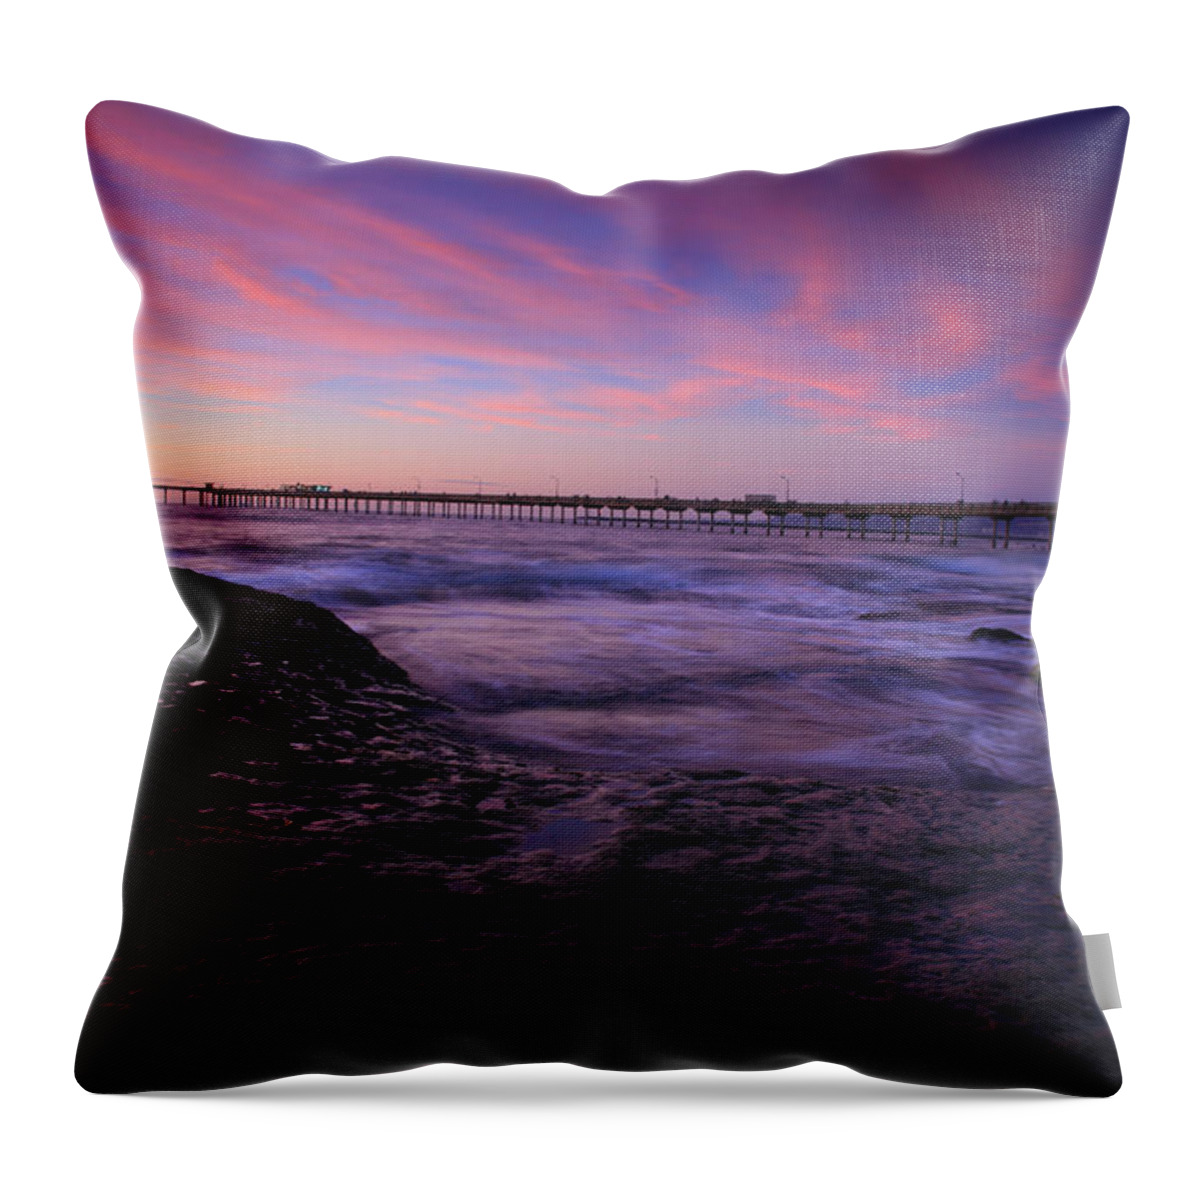 Landscape Throw Pillow featuring the photograph OB Pier Fall Sunset by Scott Cunningham